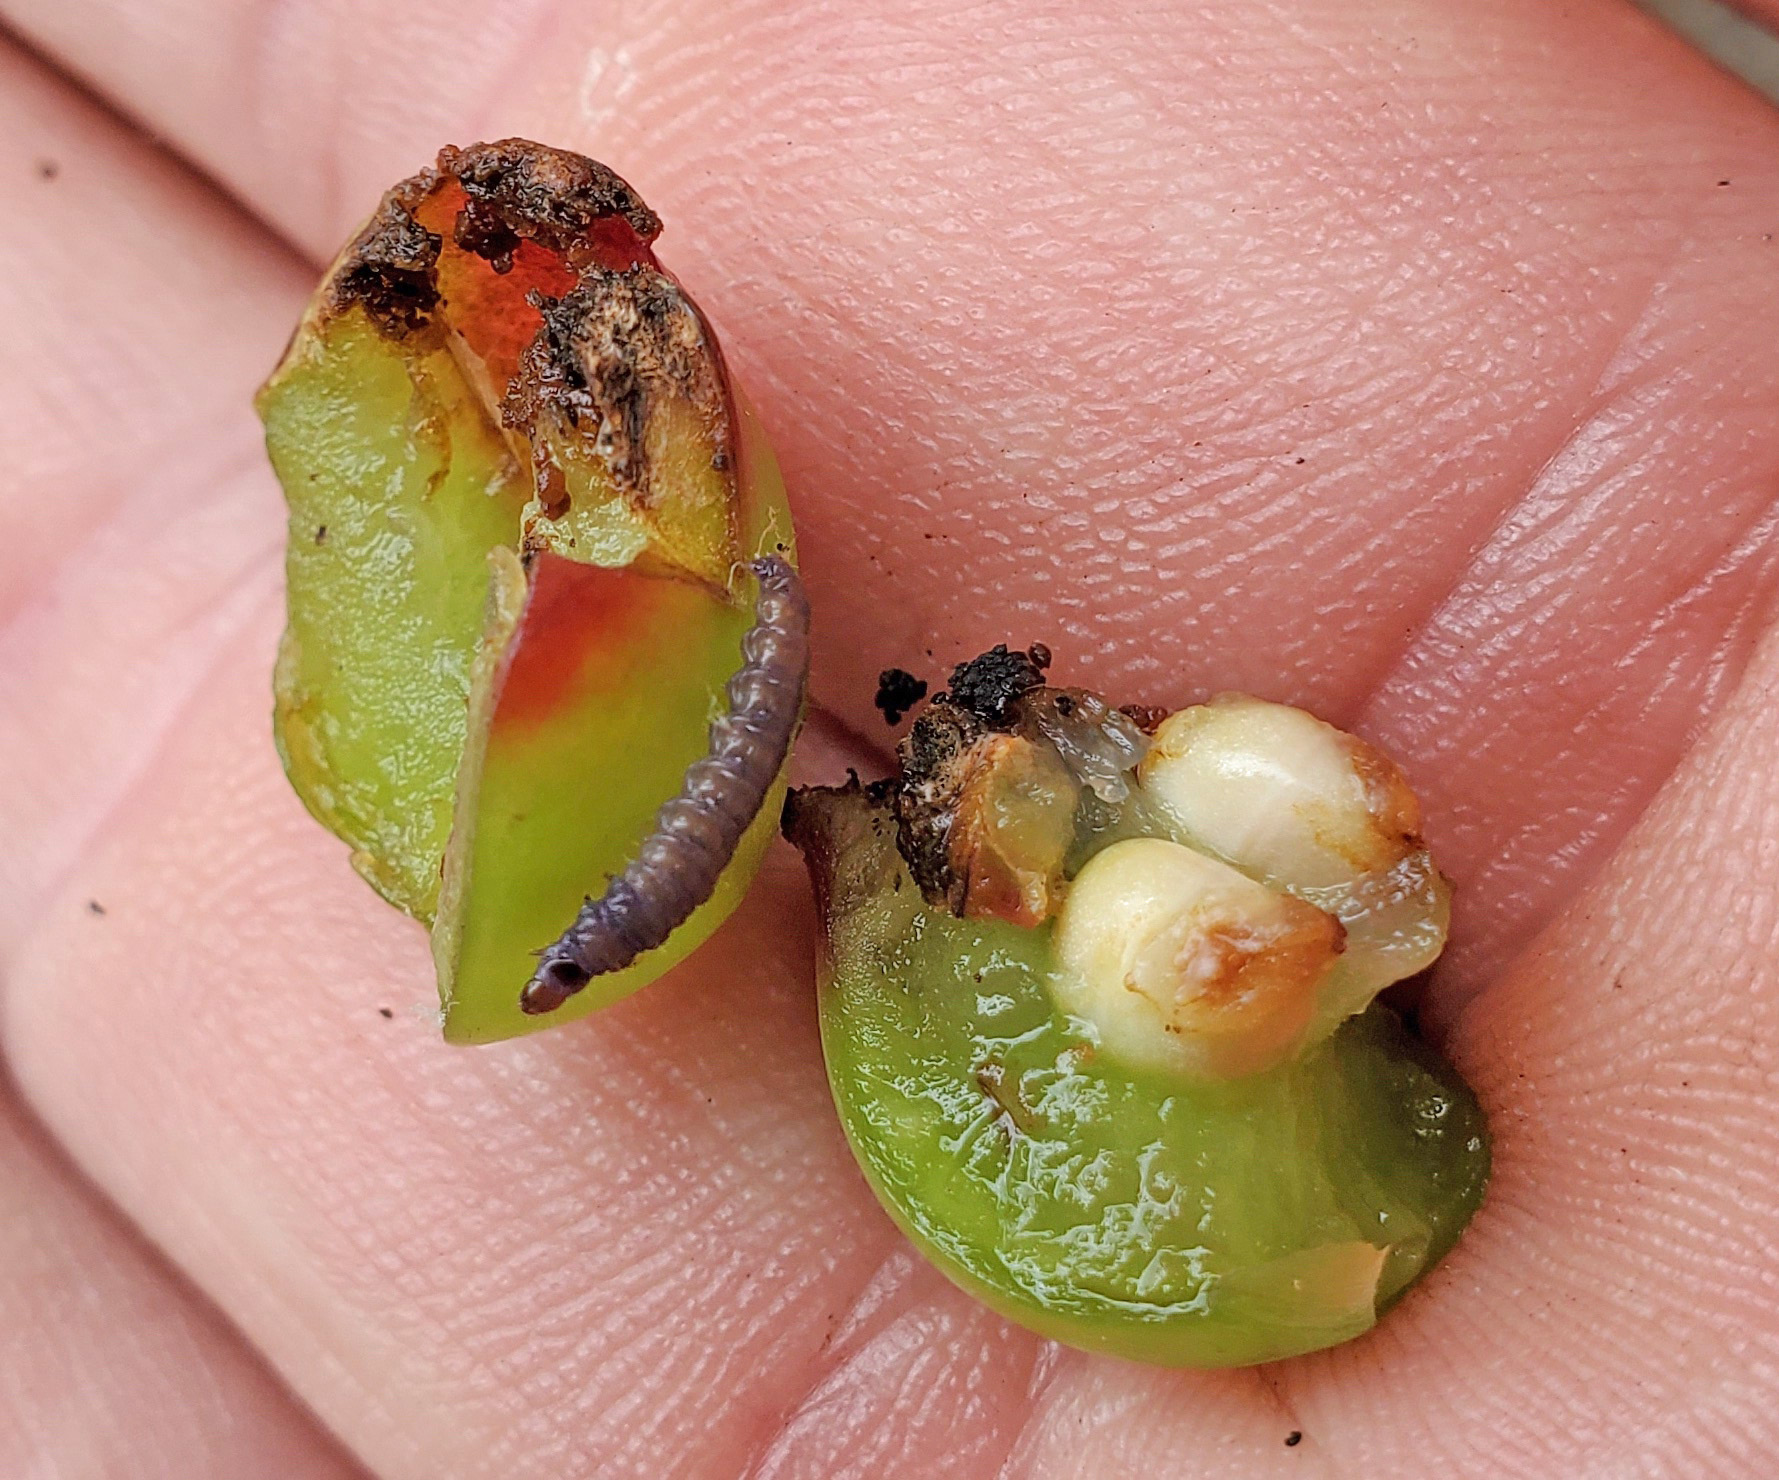 Grape berry moth larvae 